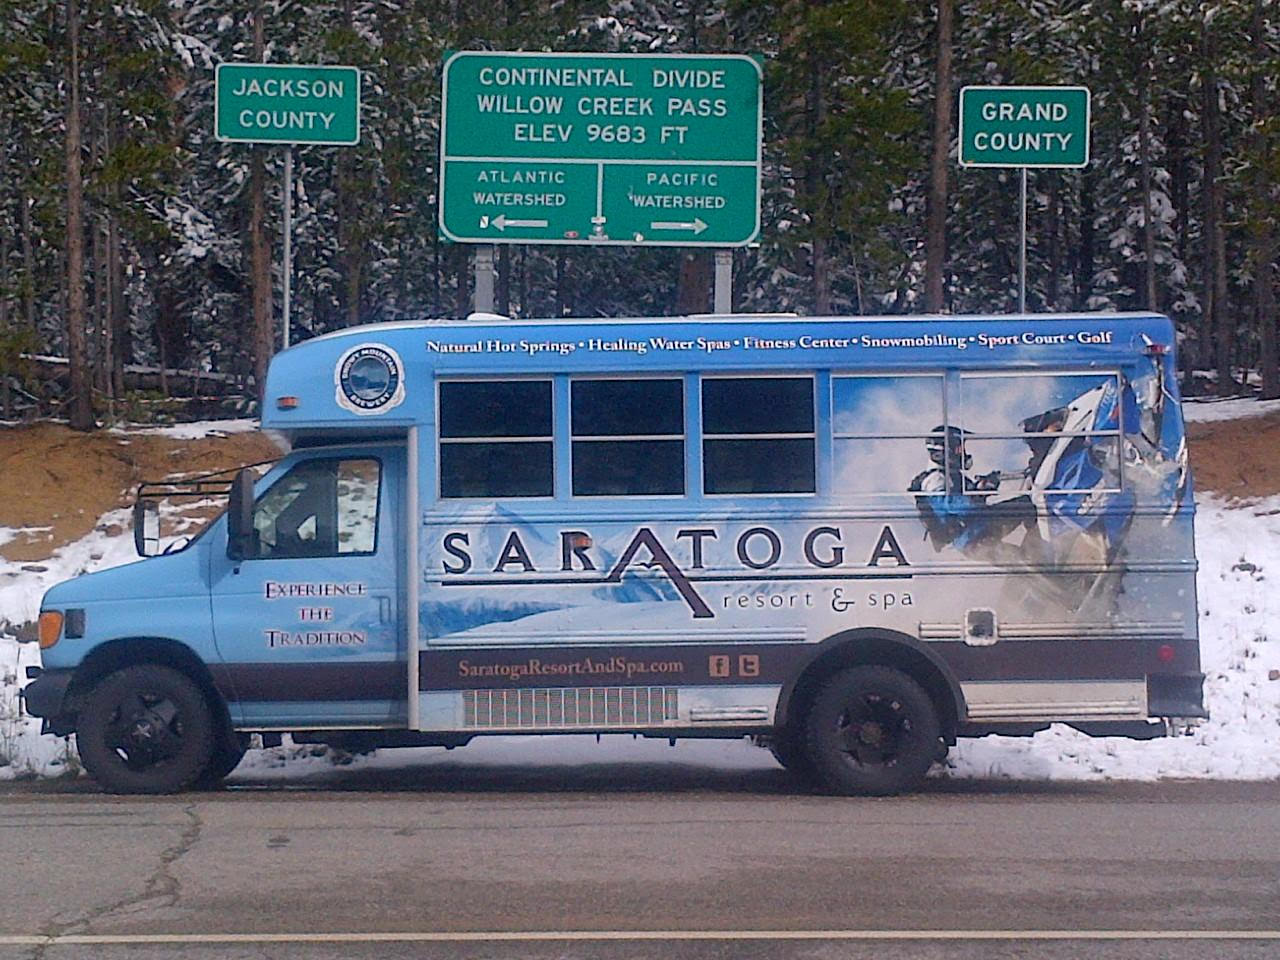 Saratoga Resort and Spa Shuttle